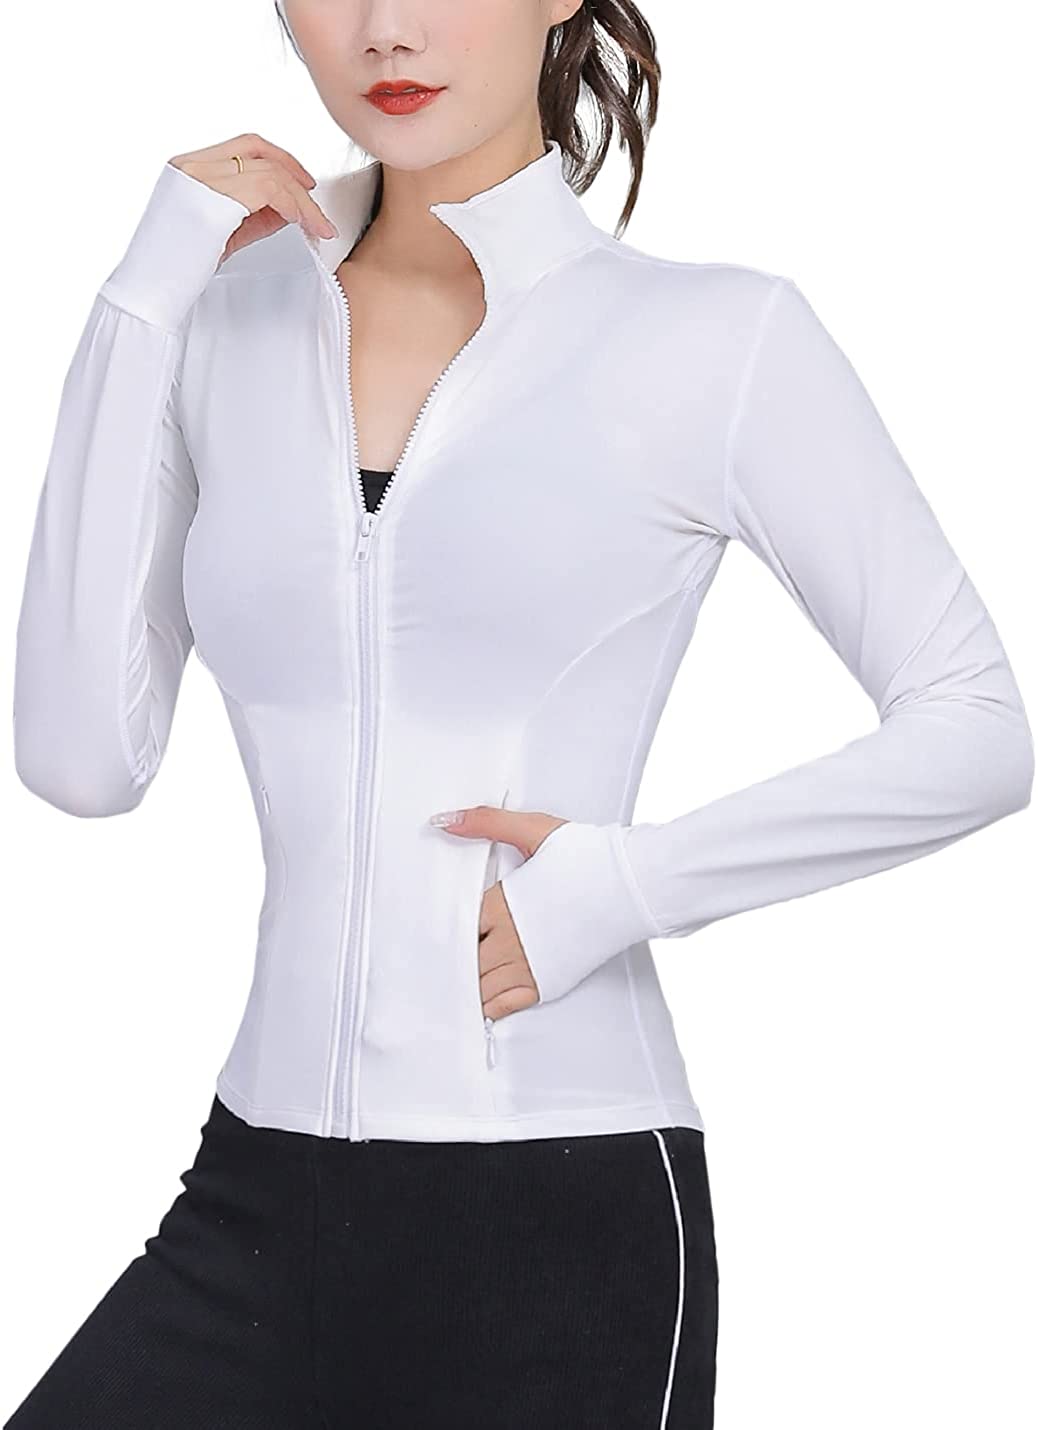  Lviefent Womens Lightweight Full Zip Running Track BBL Jacket  Workout Slim Fit Yoga Sportwear